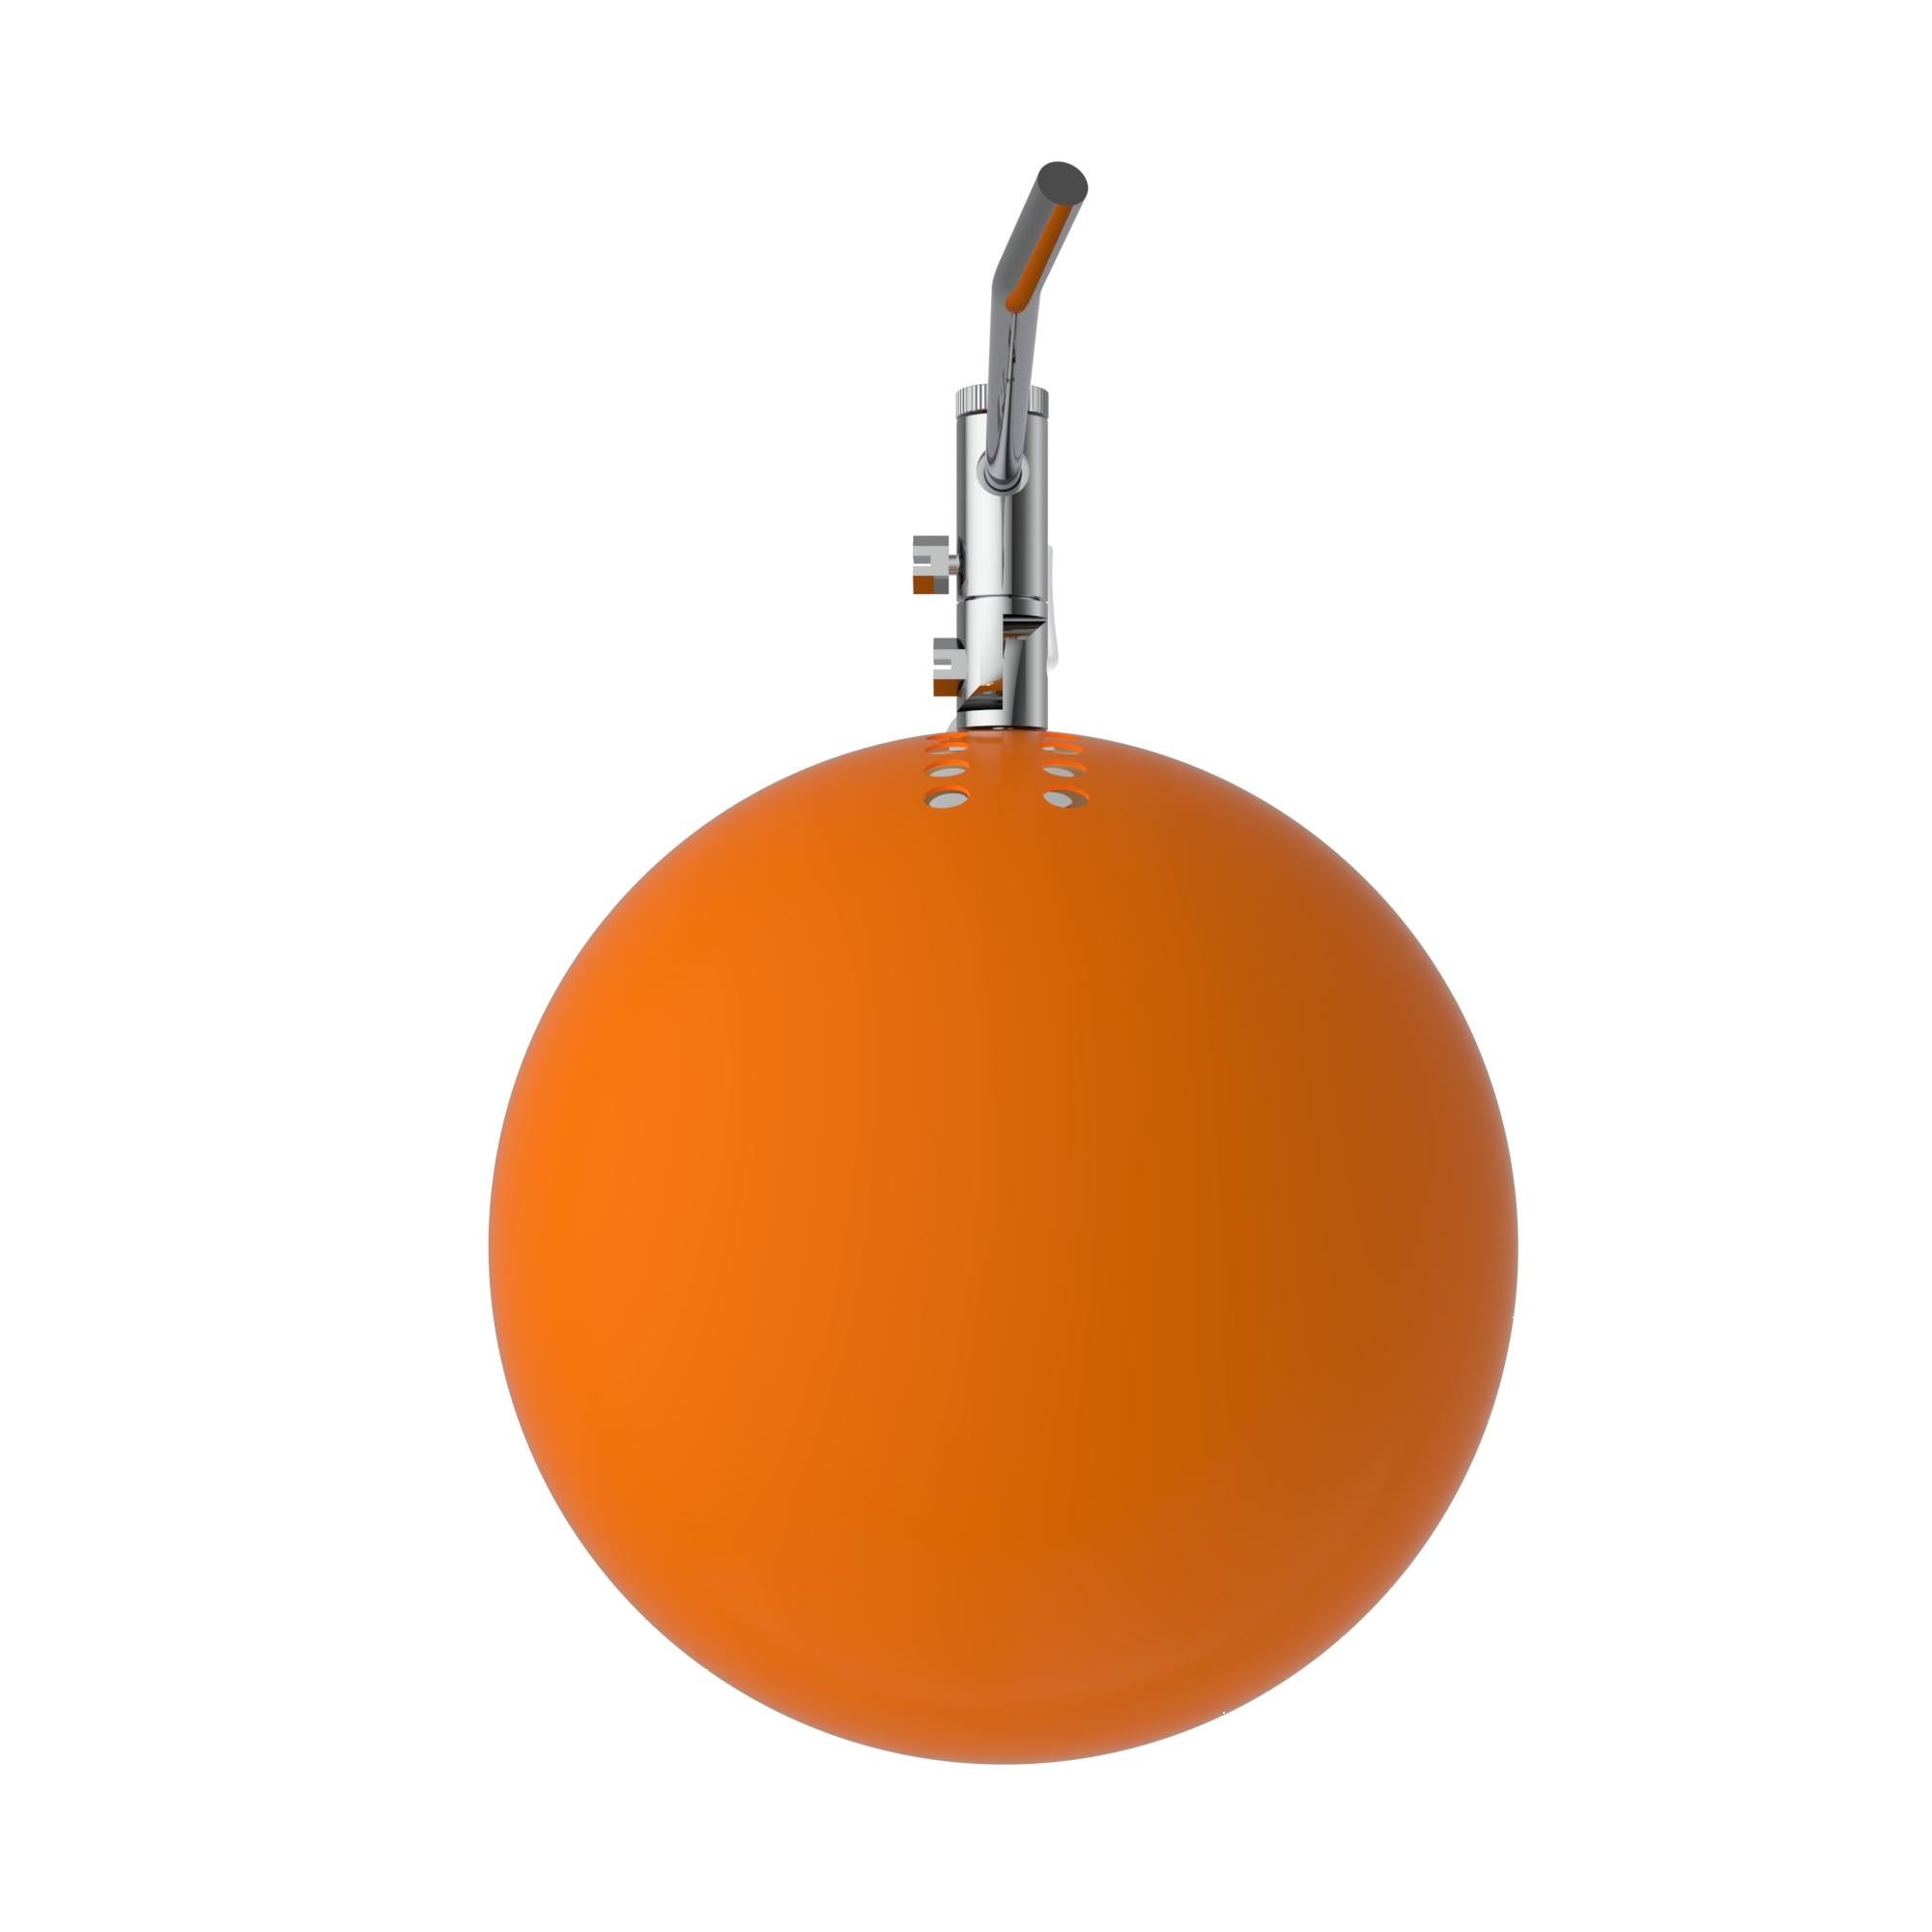 Alain Richard 'A22f' Task Lamp in Orange for Disderot In New Condition For Sale In Glendale, CA